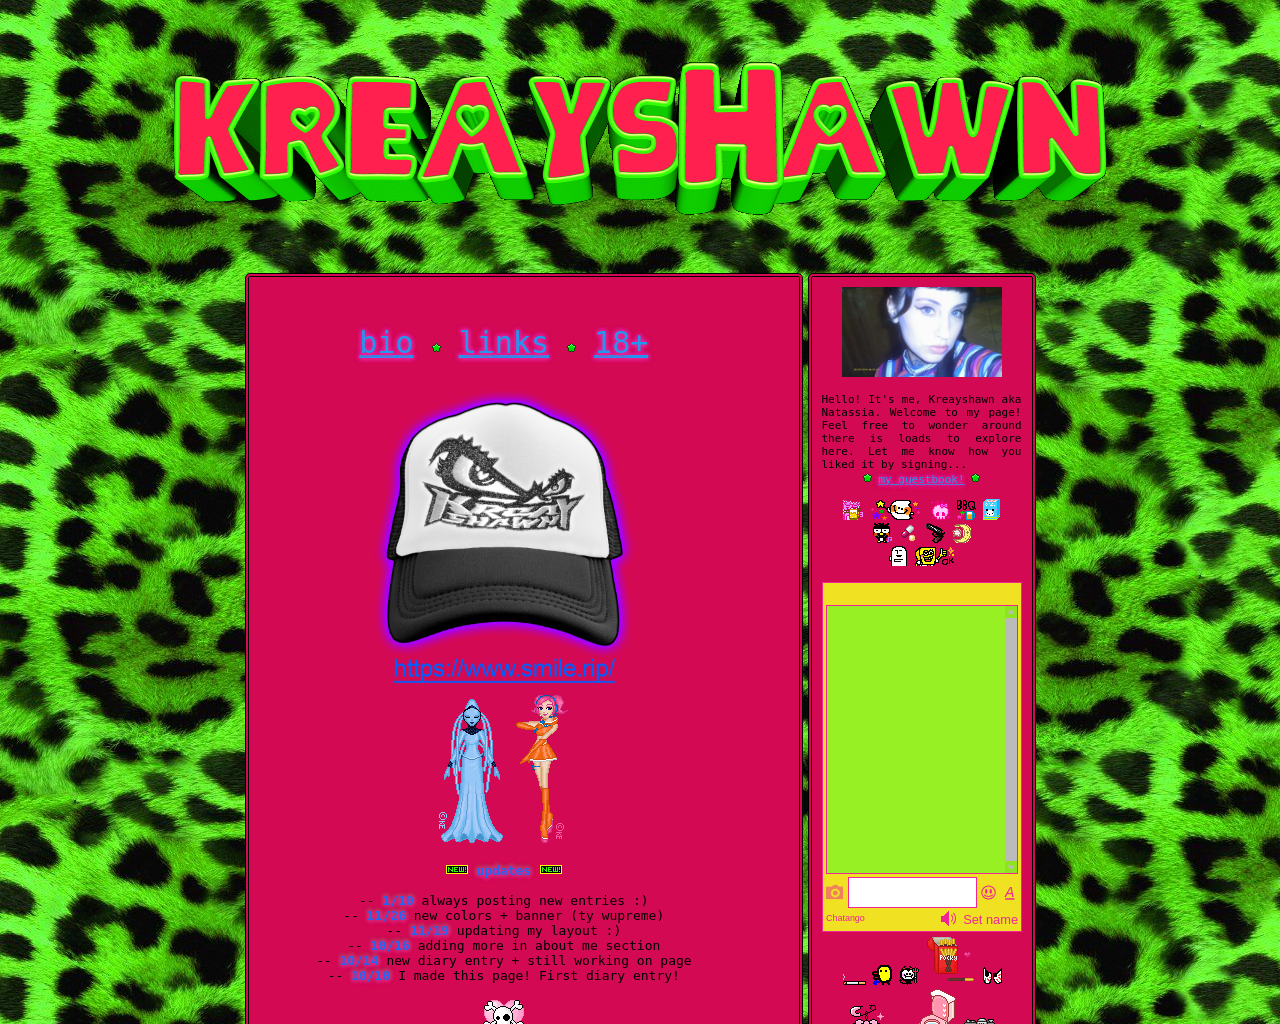 kreayshawn.com